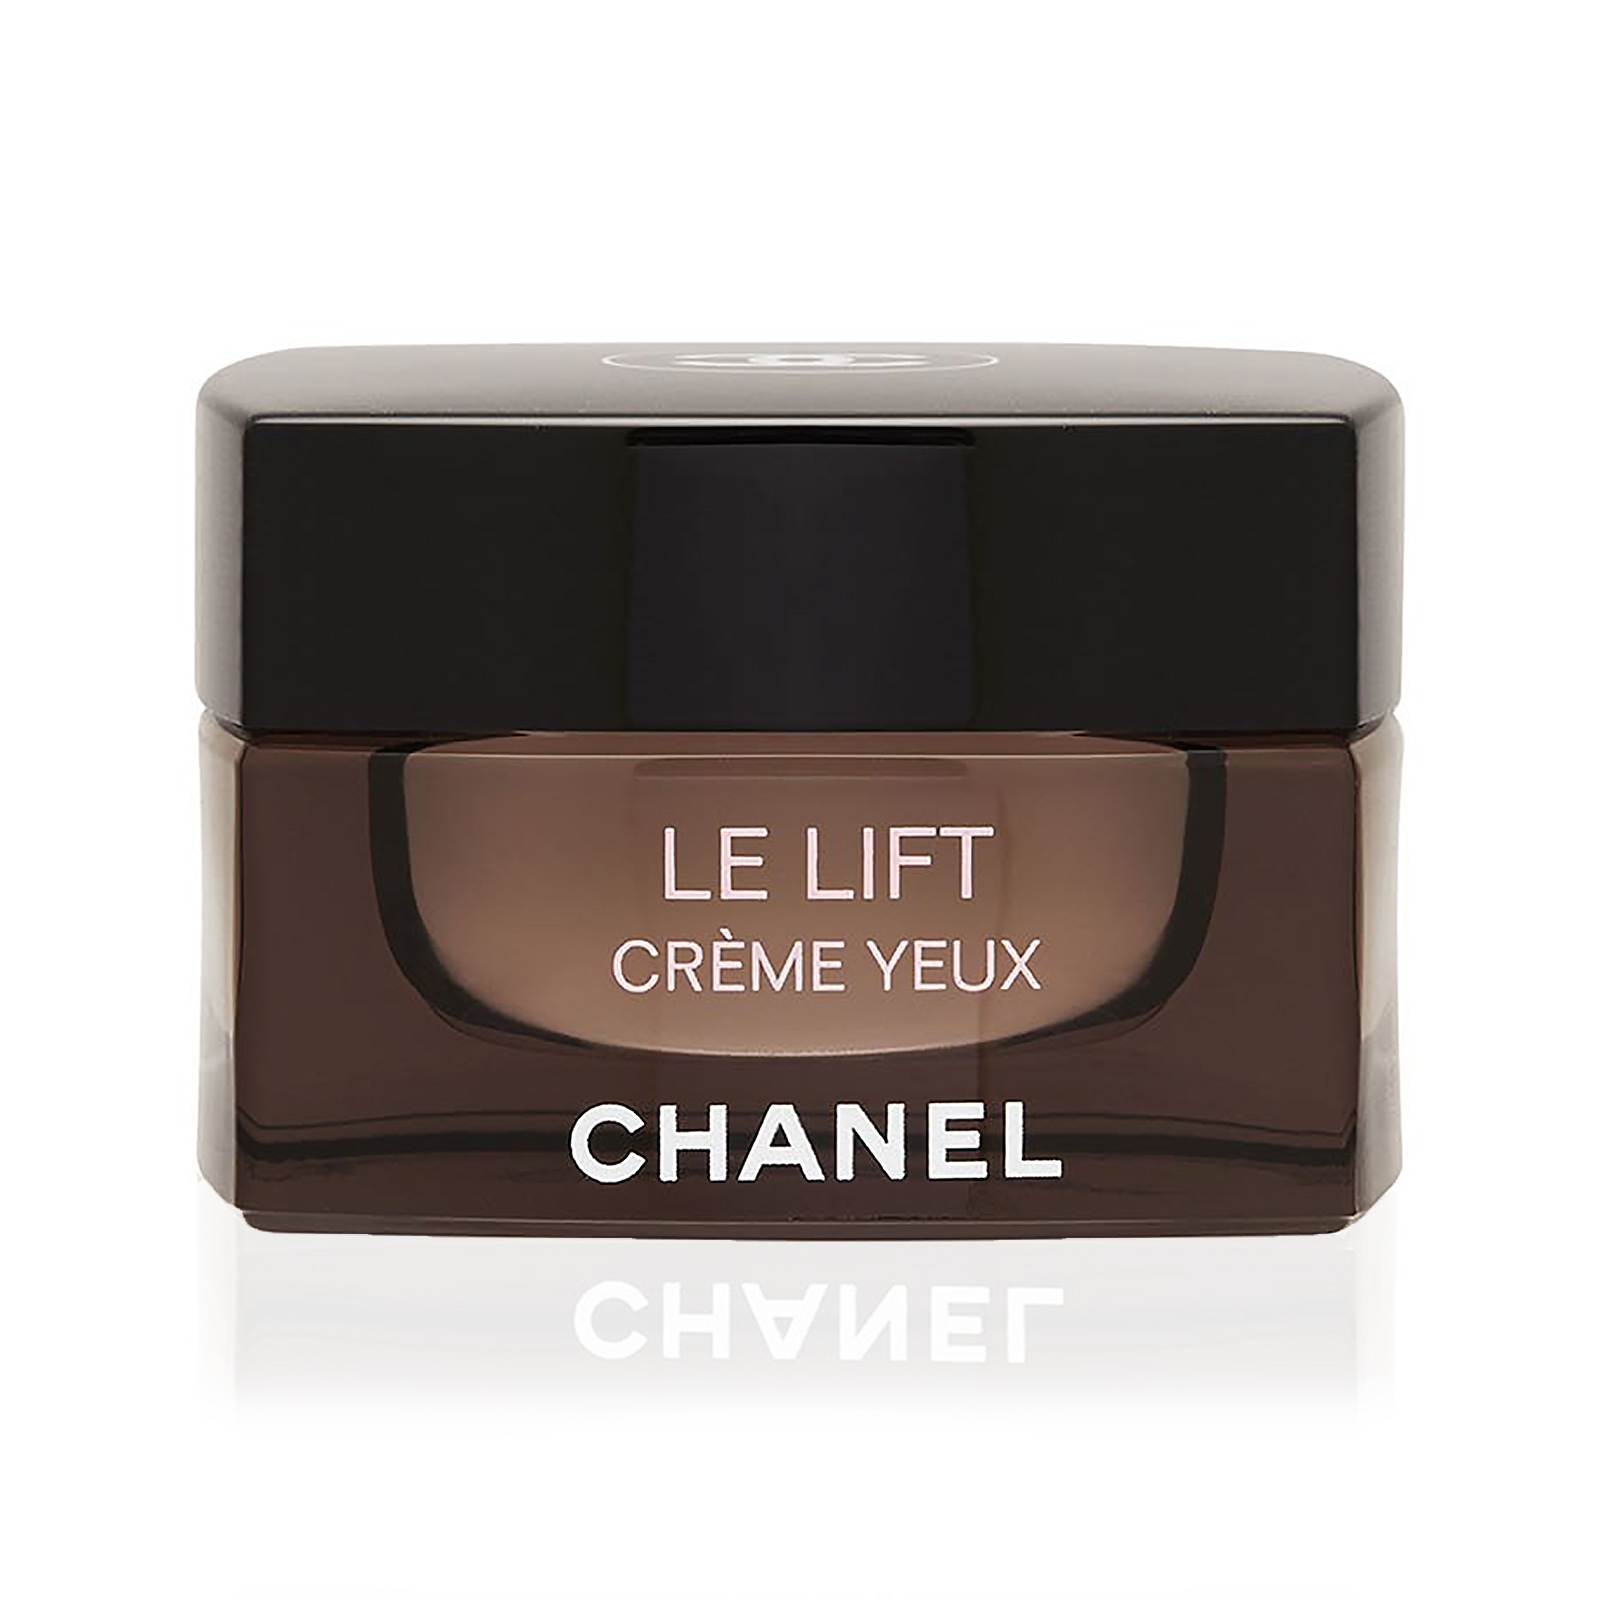 Chanel Le Lift Crème Yeux15 g 0.5 oz AKB Beauty